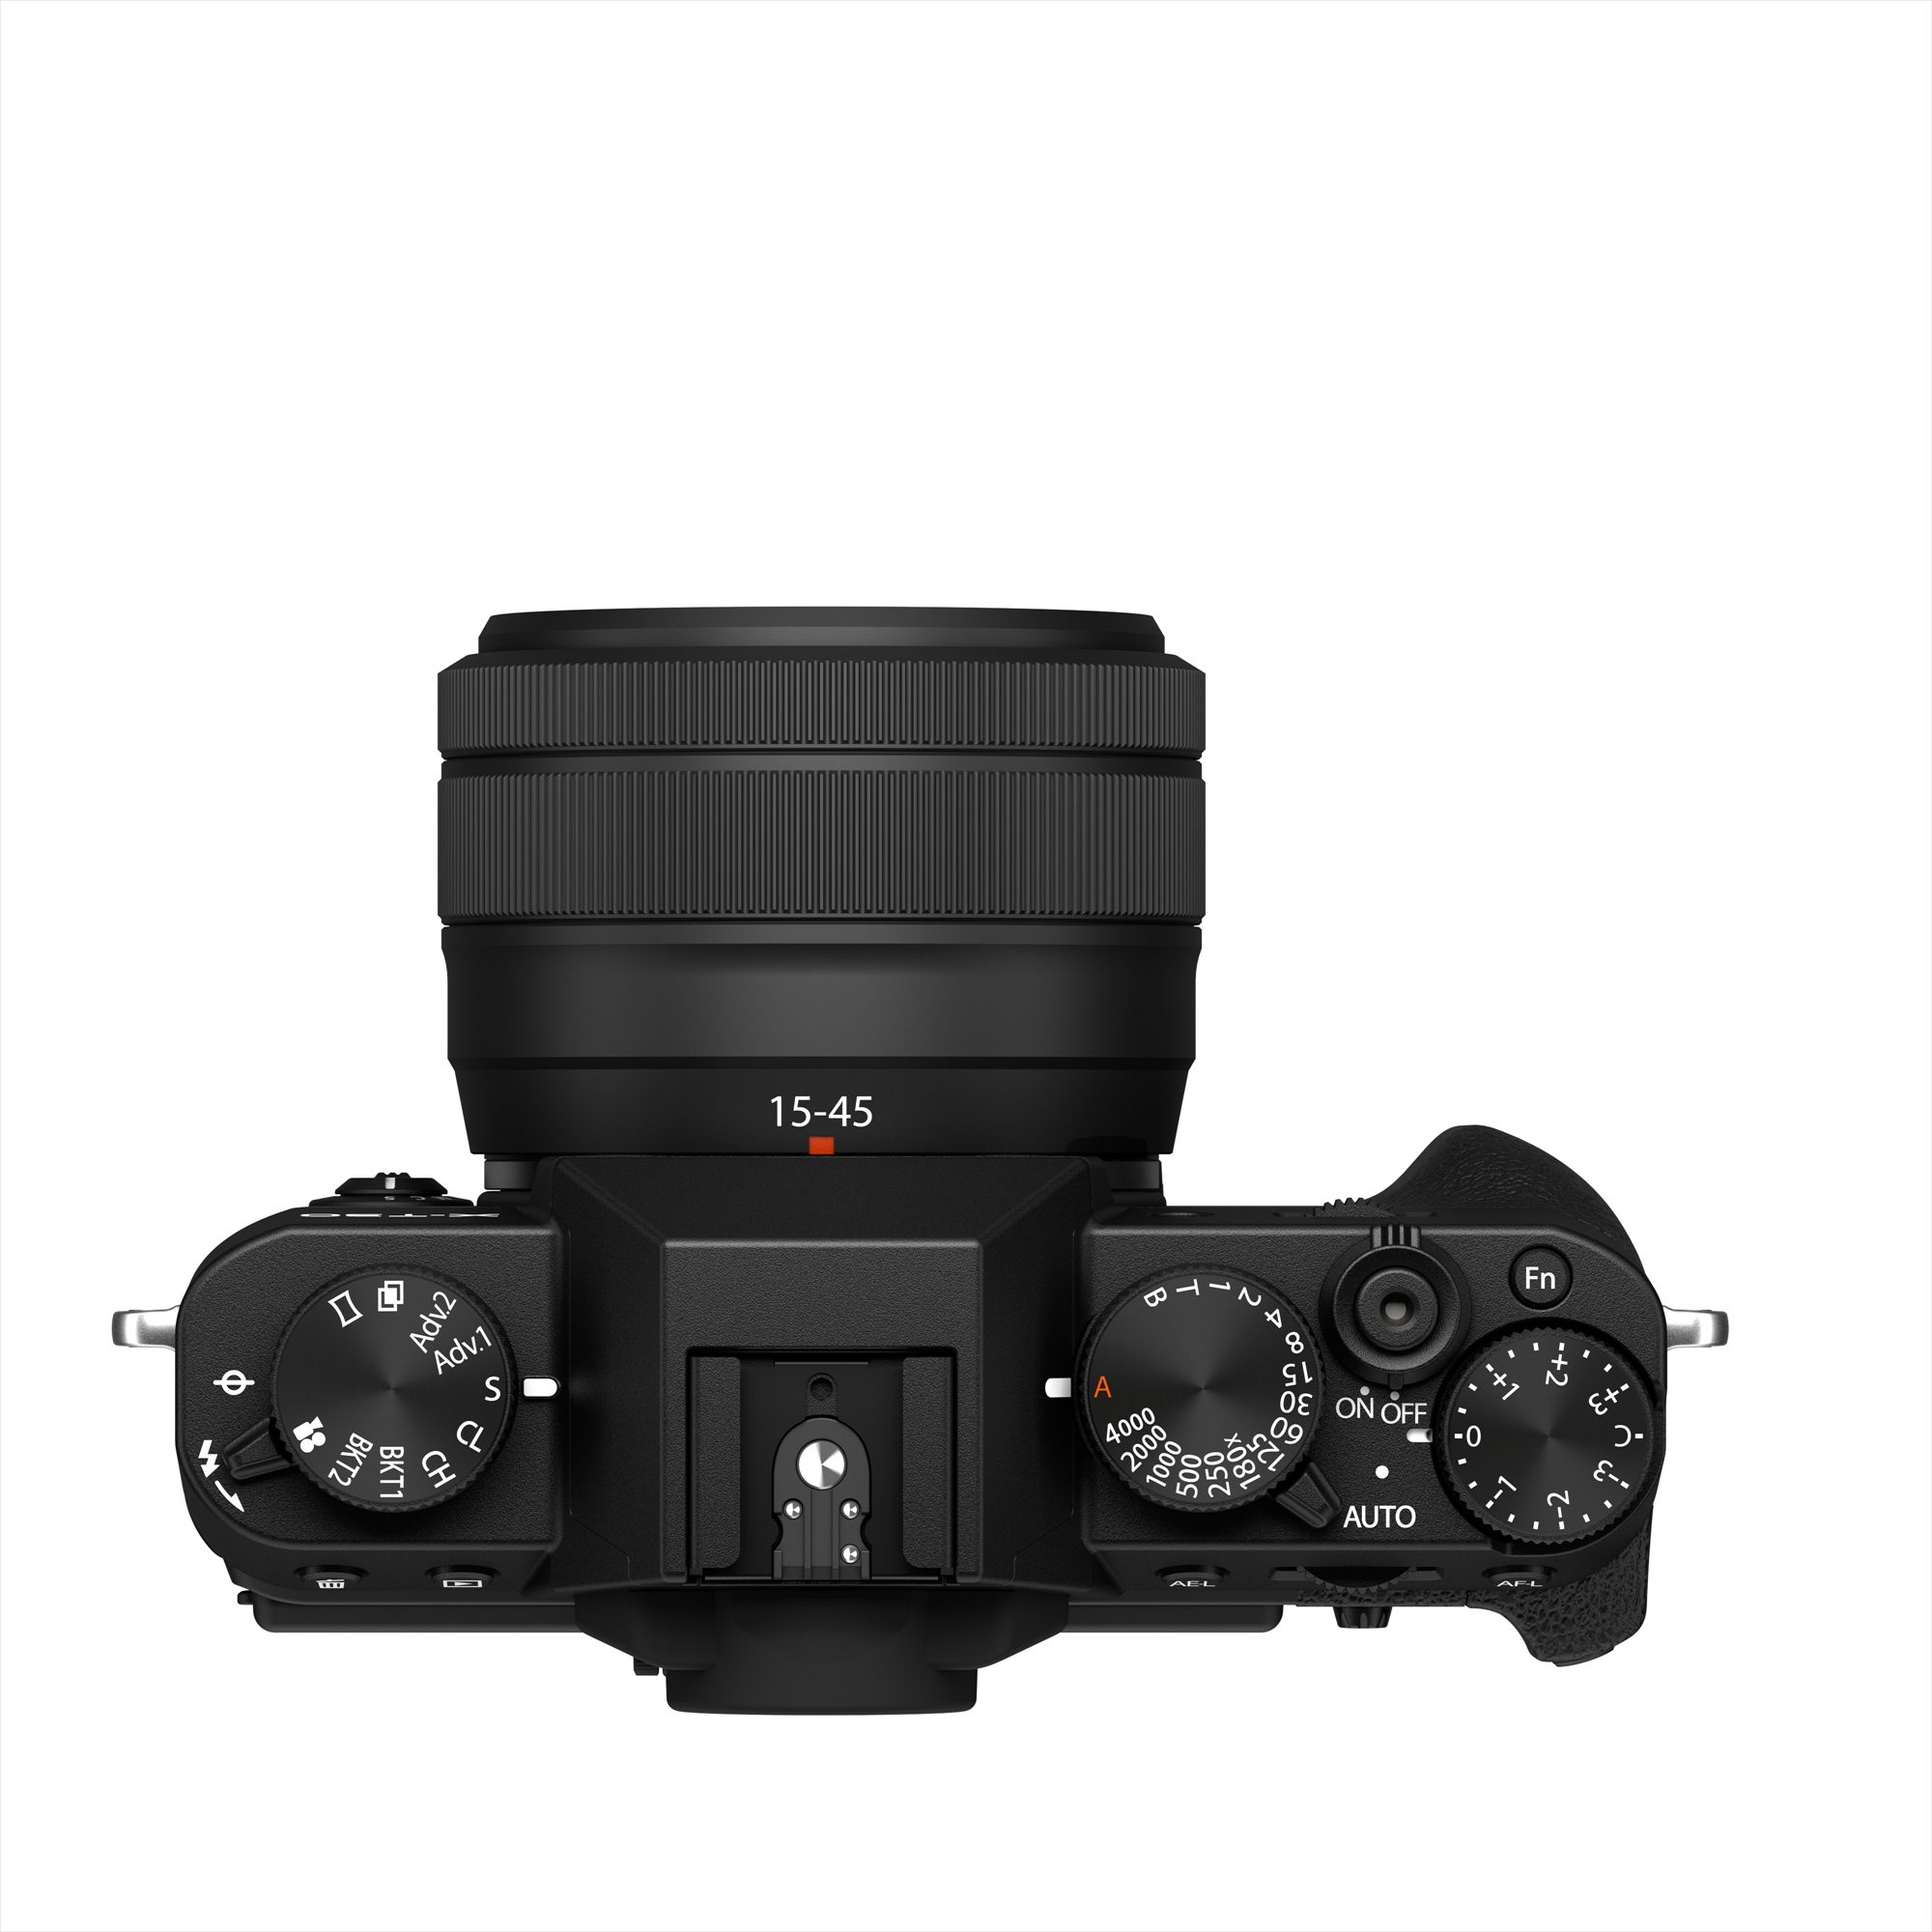 Fujifilm X-T30 II with XC15-45mm lens - Black